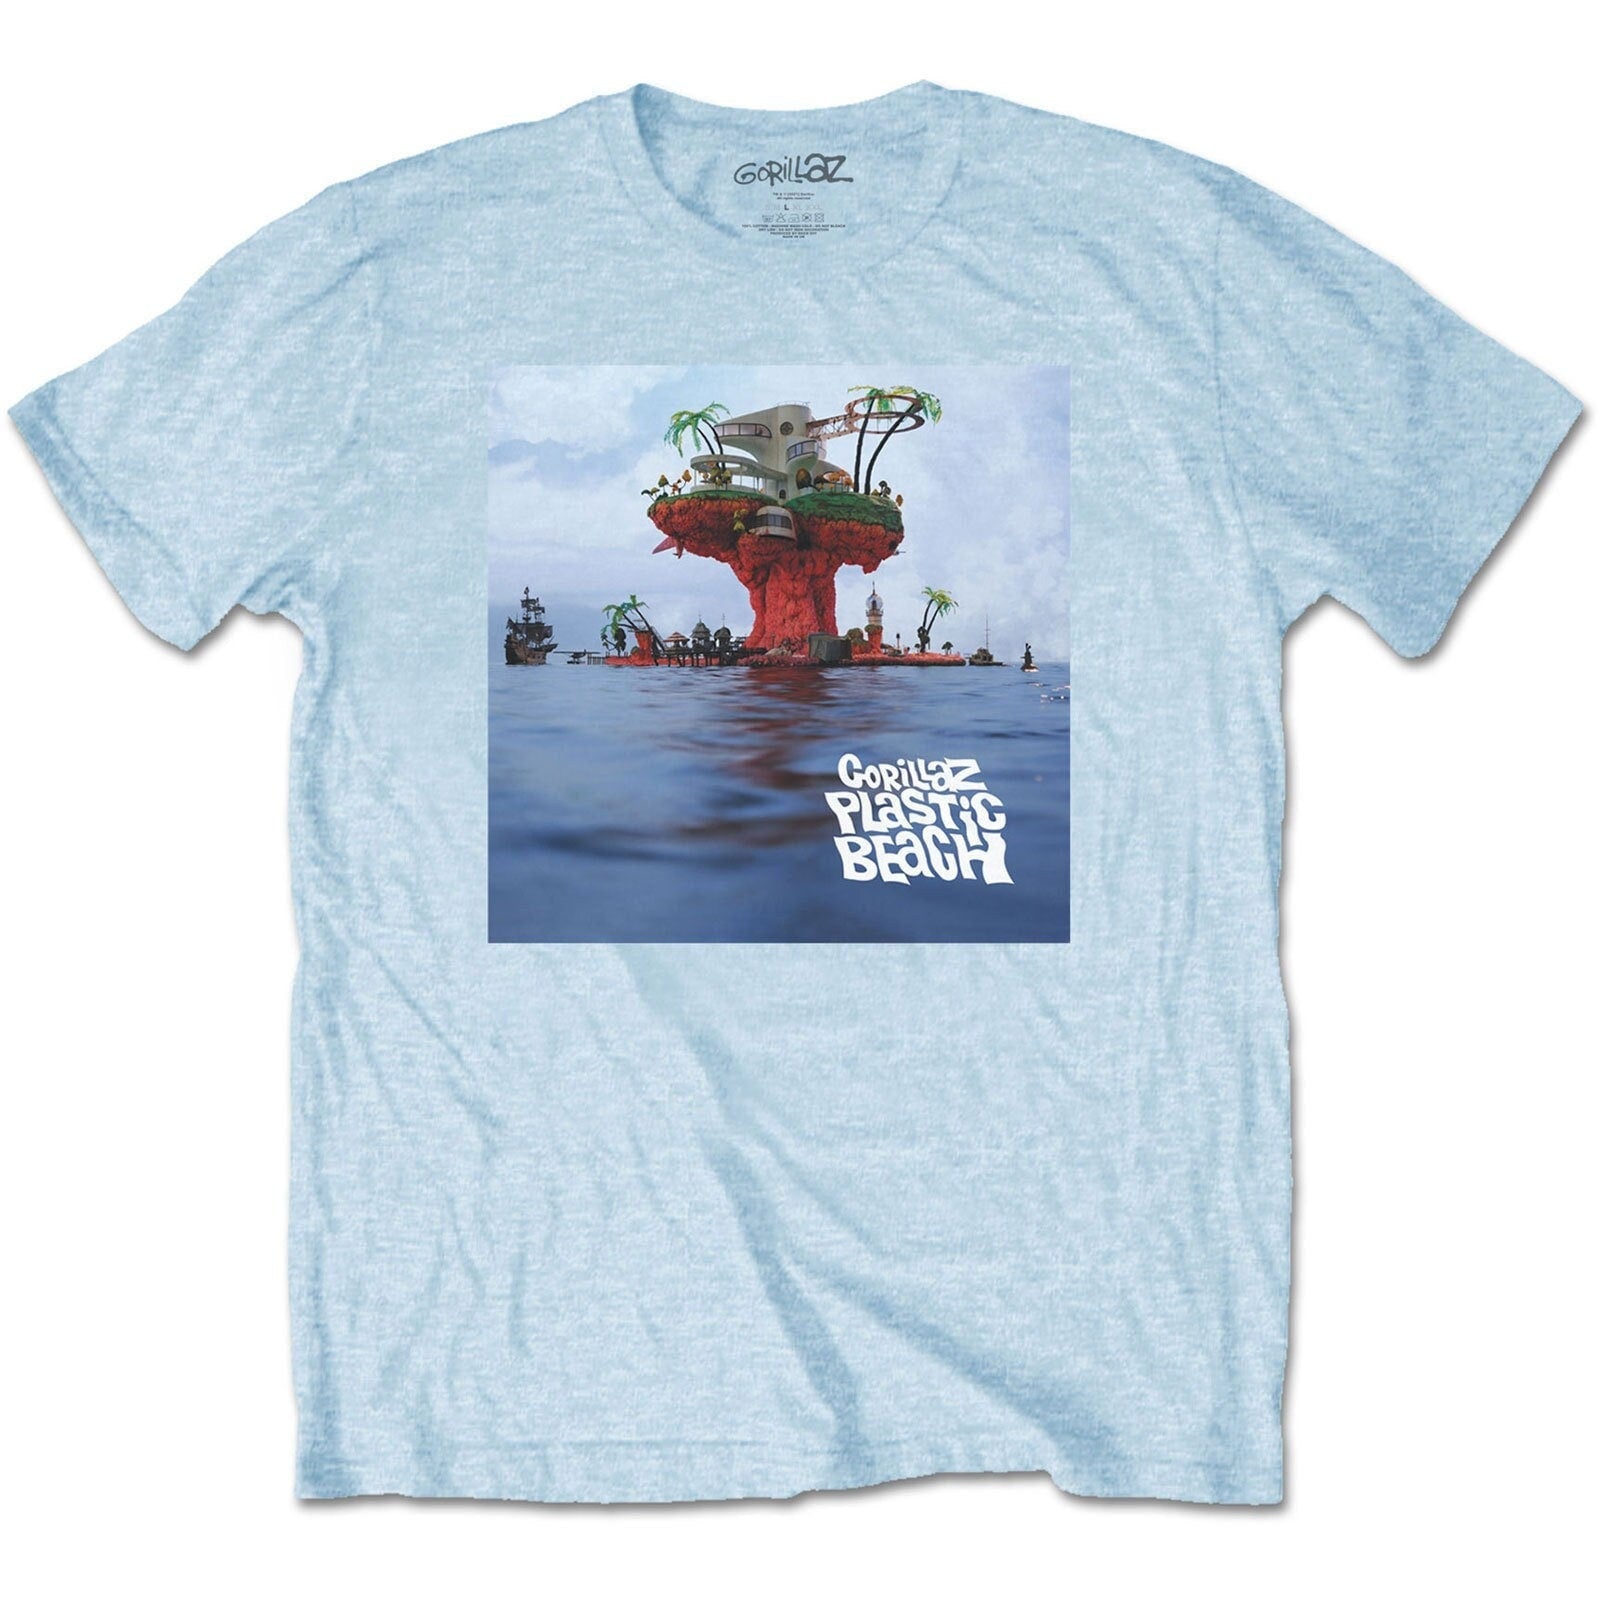 Gorillaz T-Shirt - Plastic Beach - Blue Unisex Official Licensed Design - Worldwide Shipping - Jelly Frog